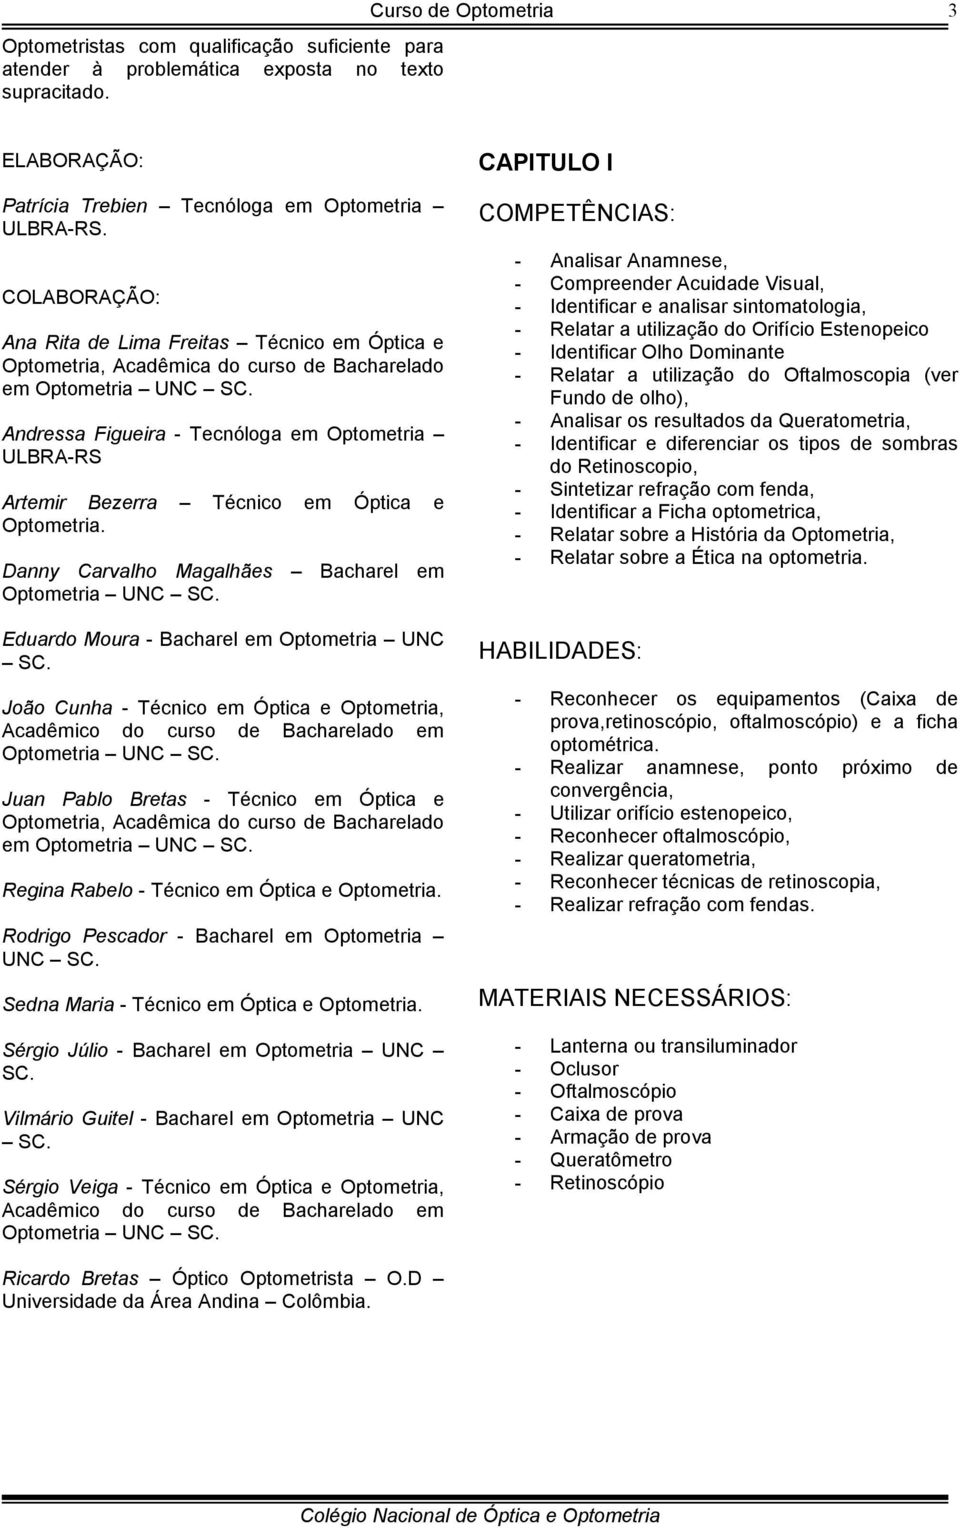 Anamnese PDF, PDF, Optometria